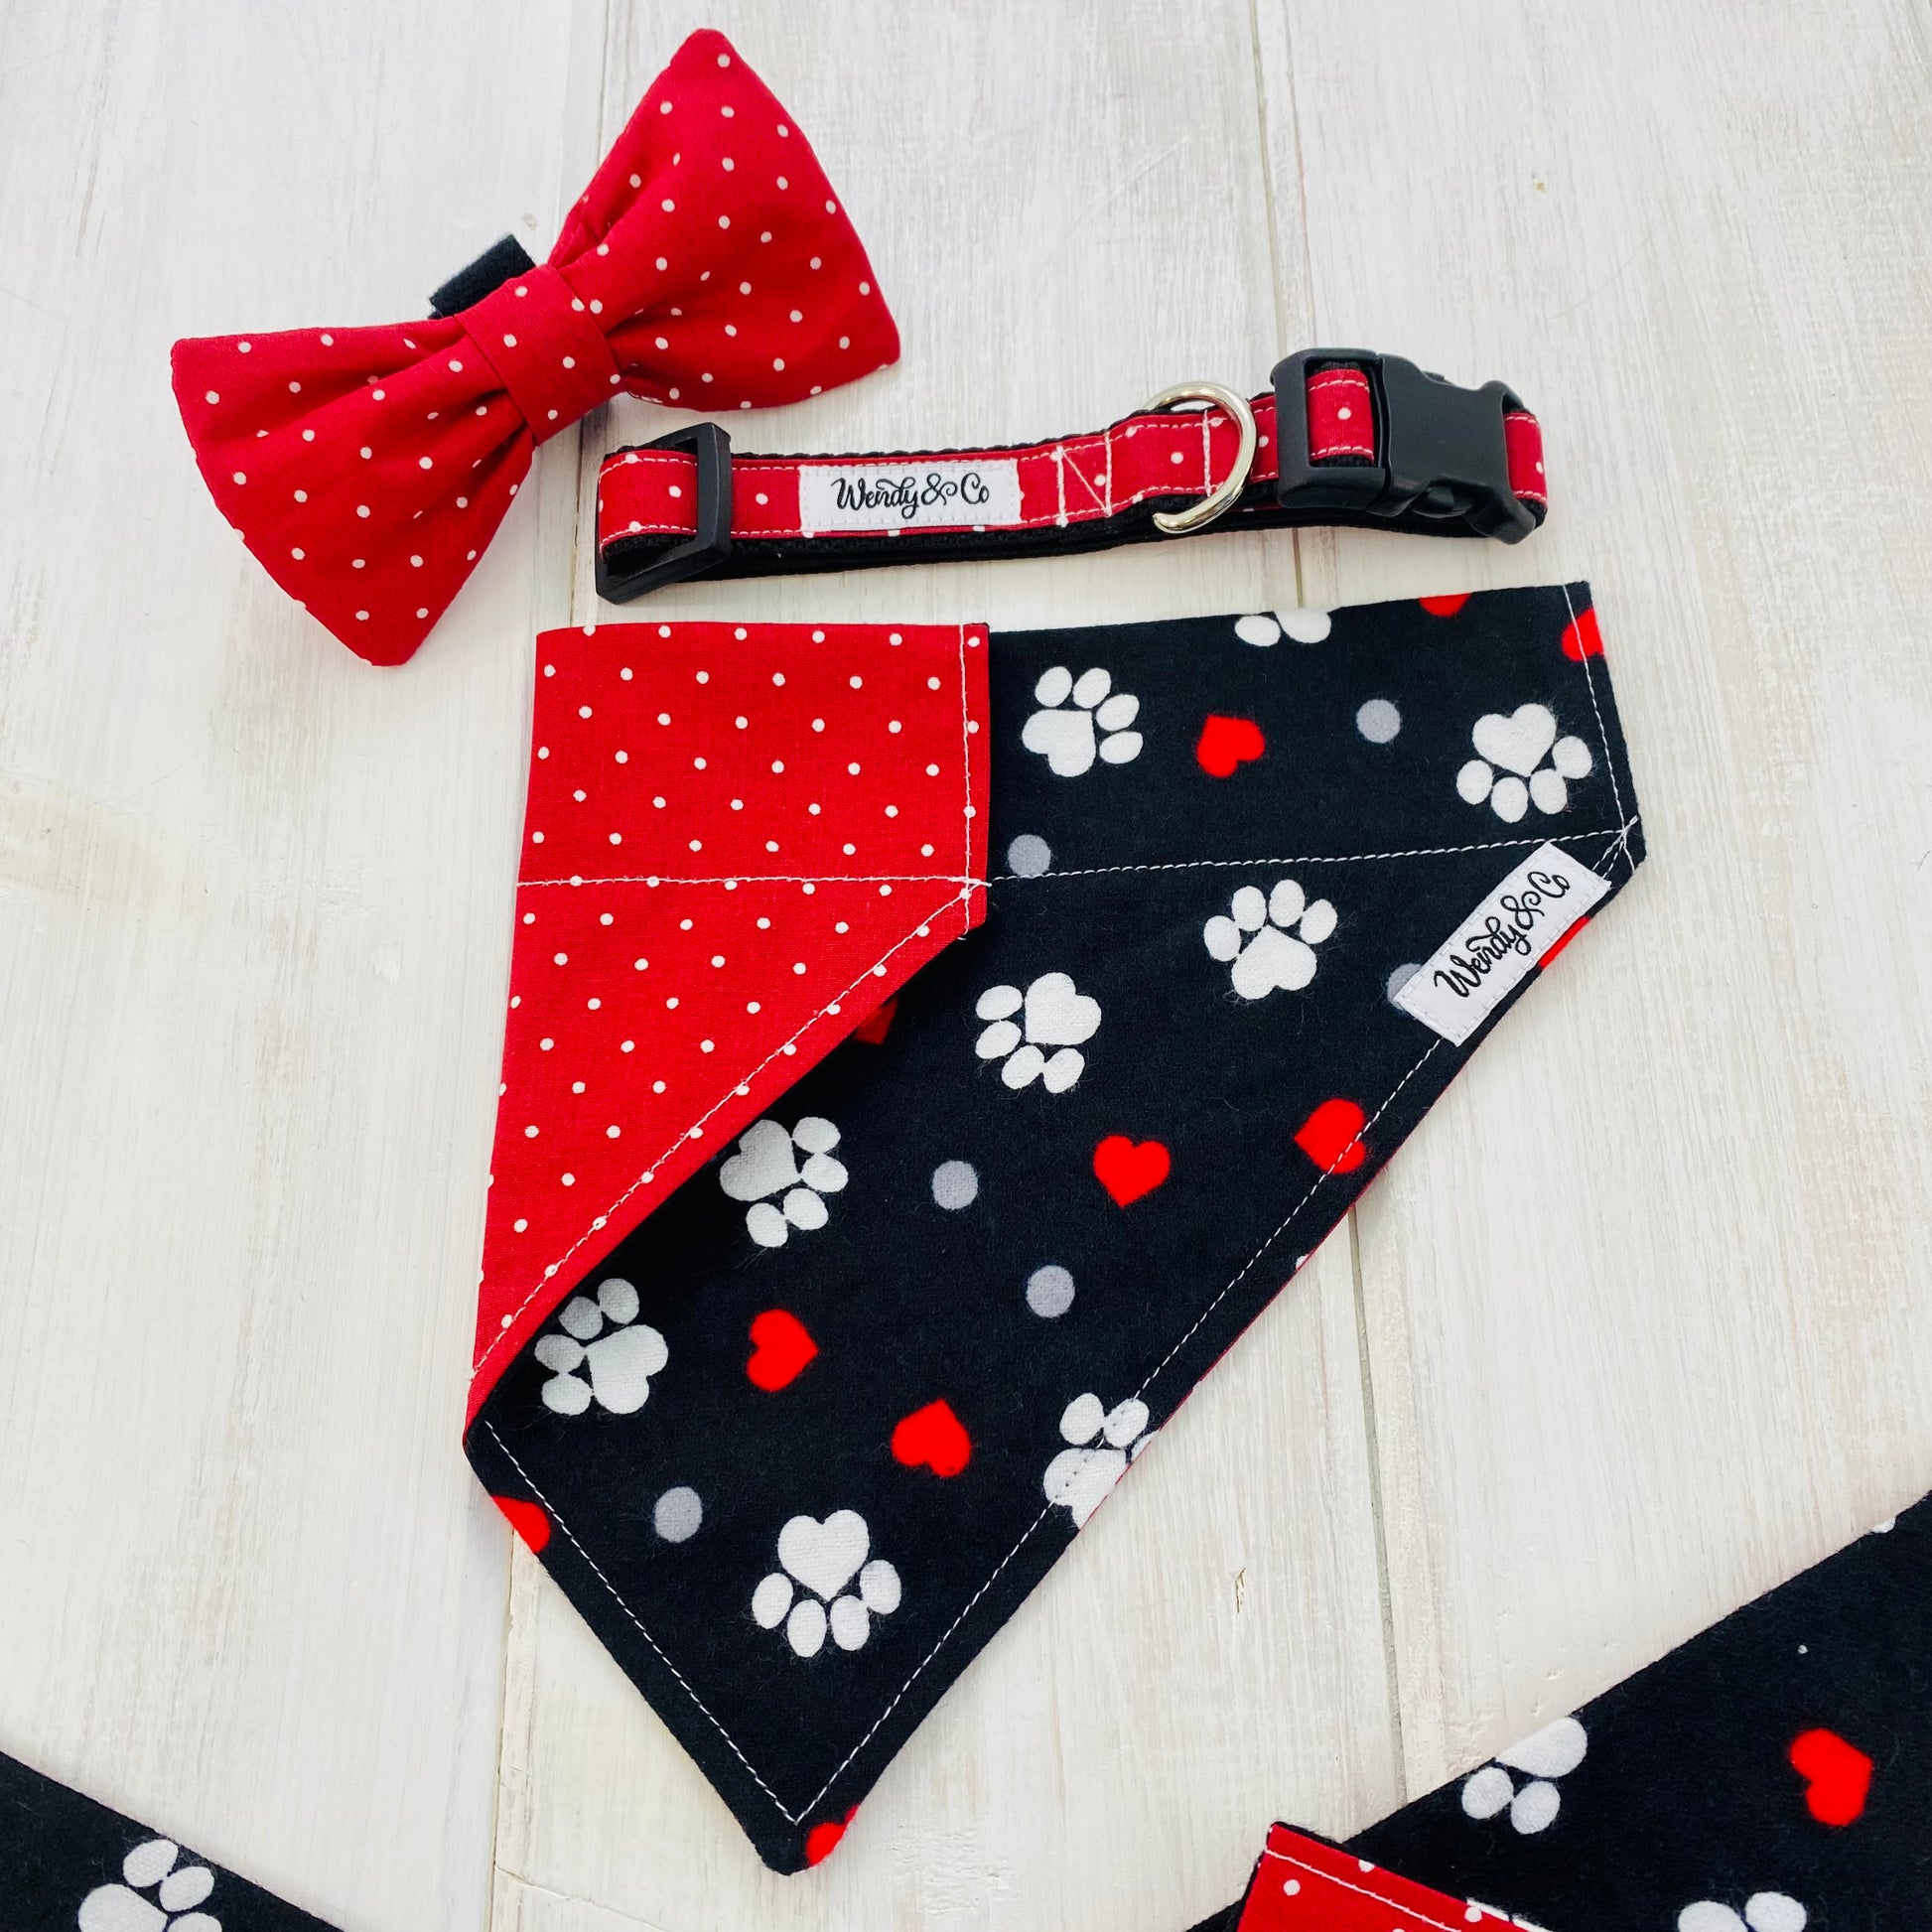 Handmade collar, bow tie, bandana in red polka dot print.